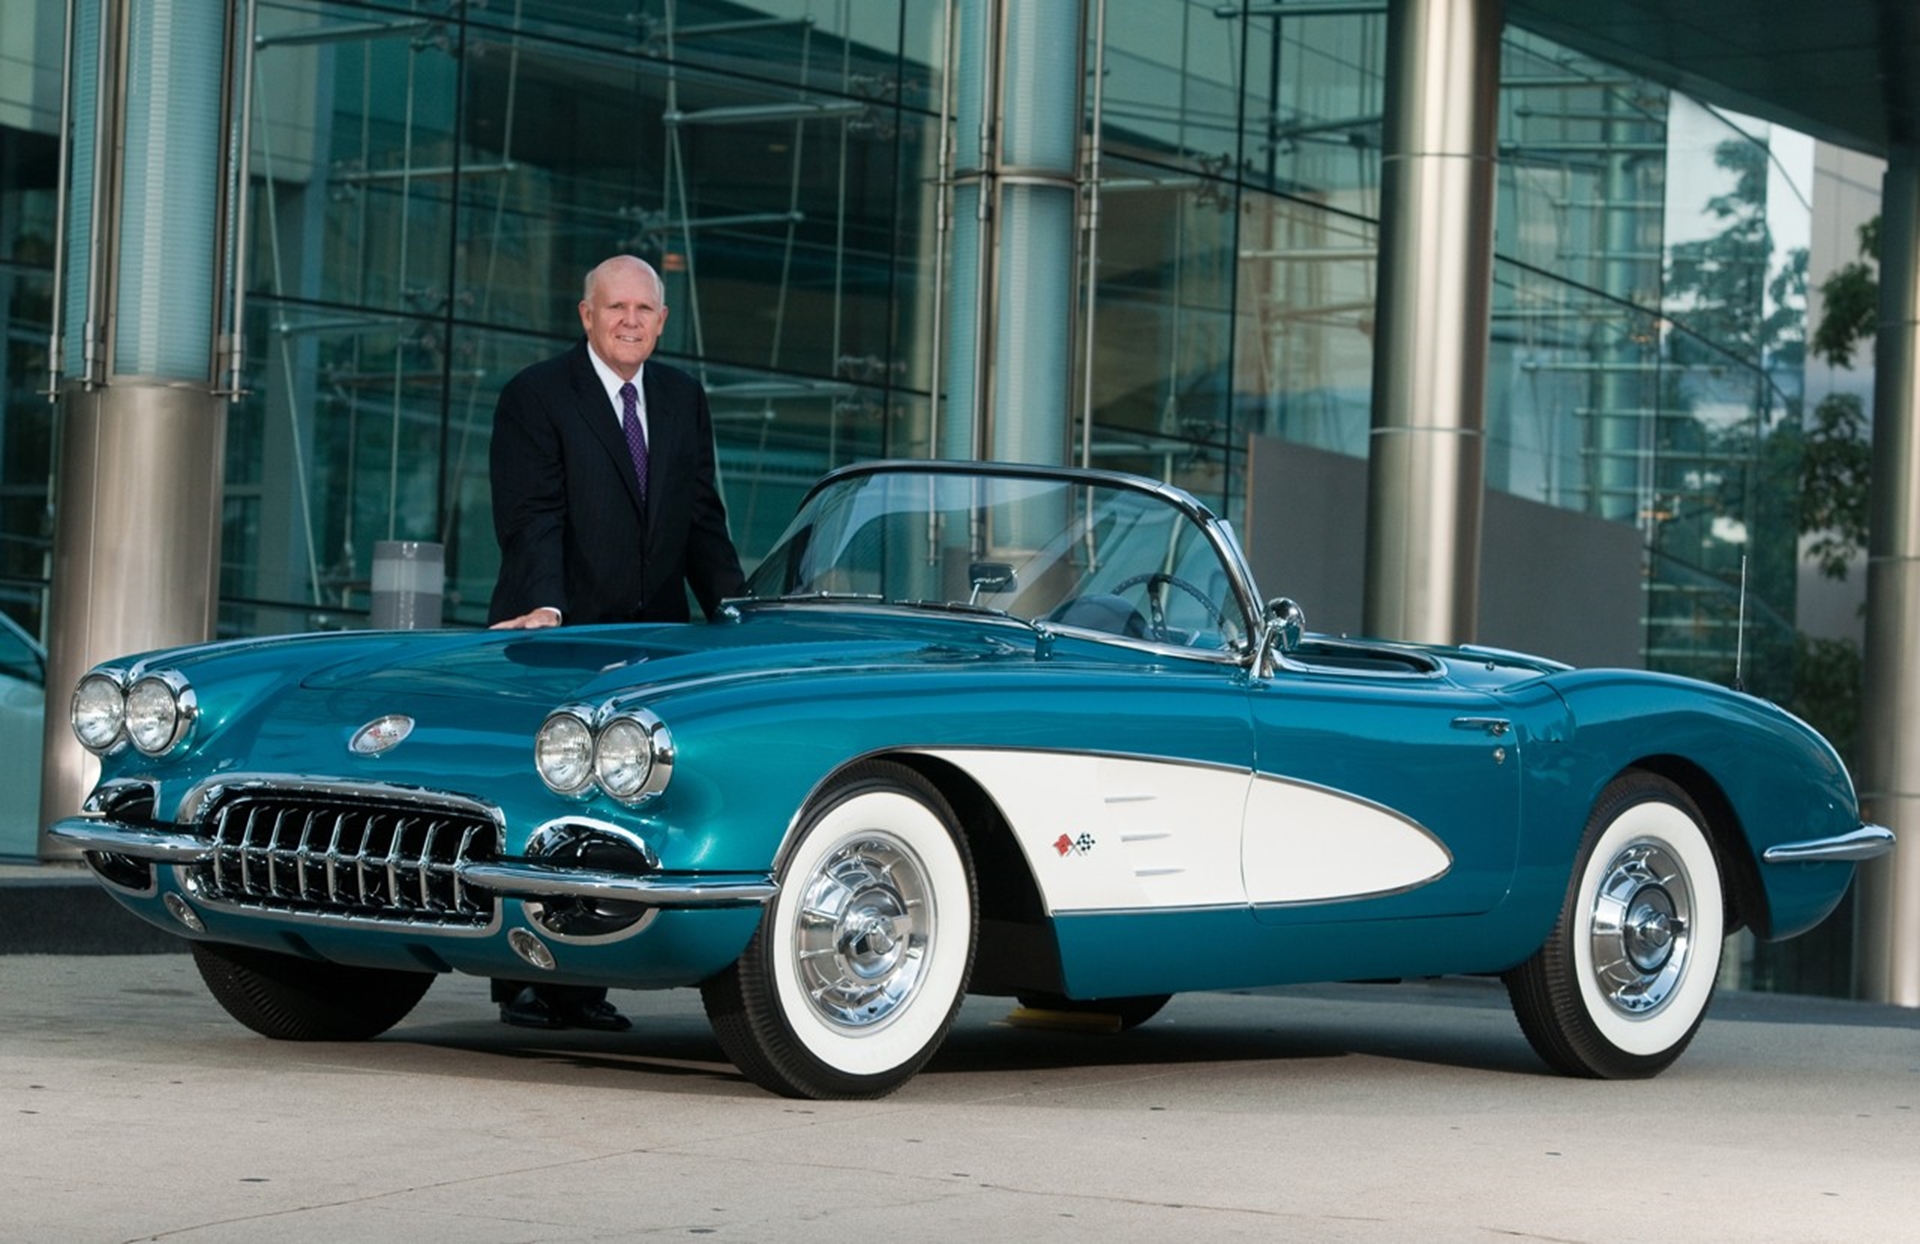 Akerson Puts 1958 Corvette on Auction Block for Habitat